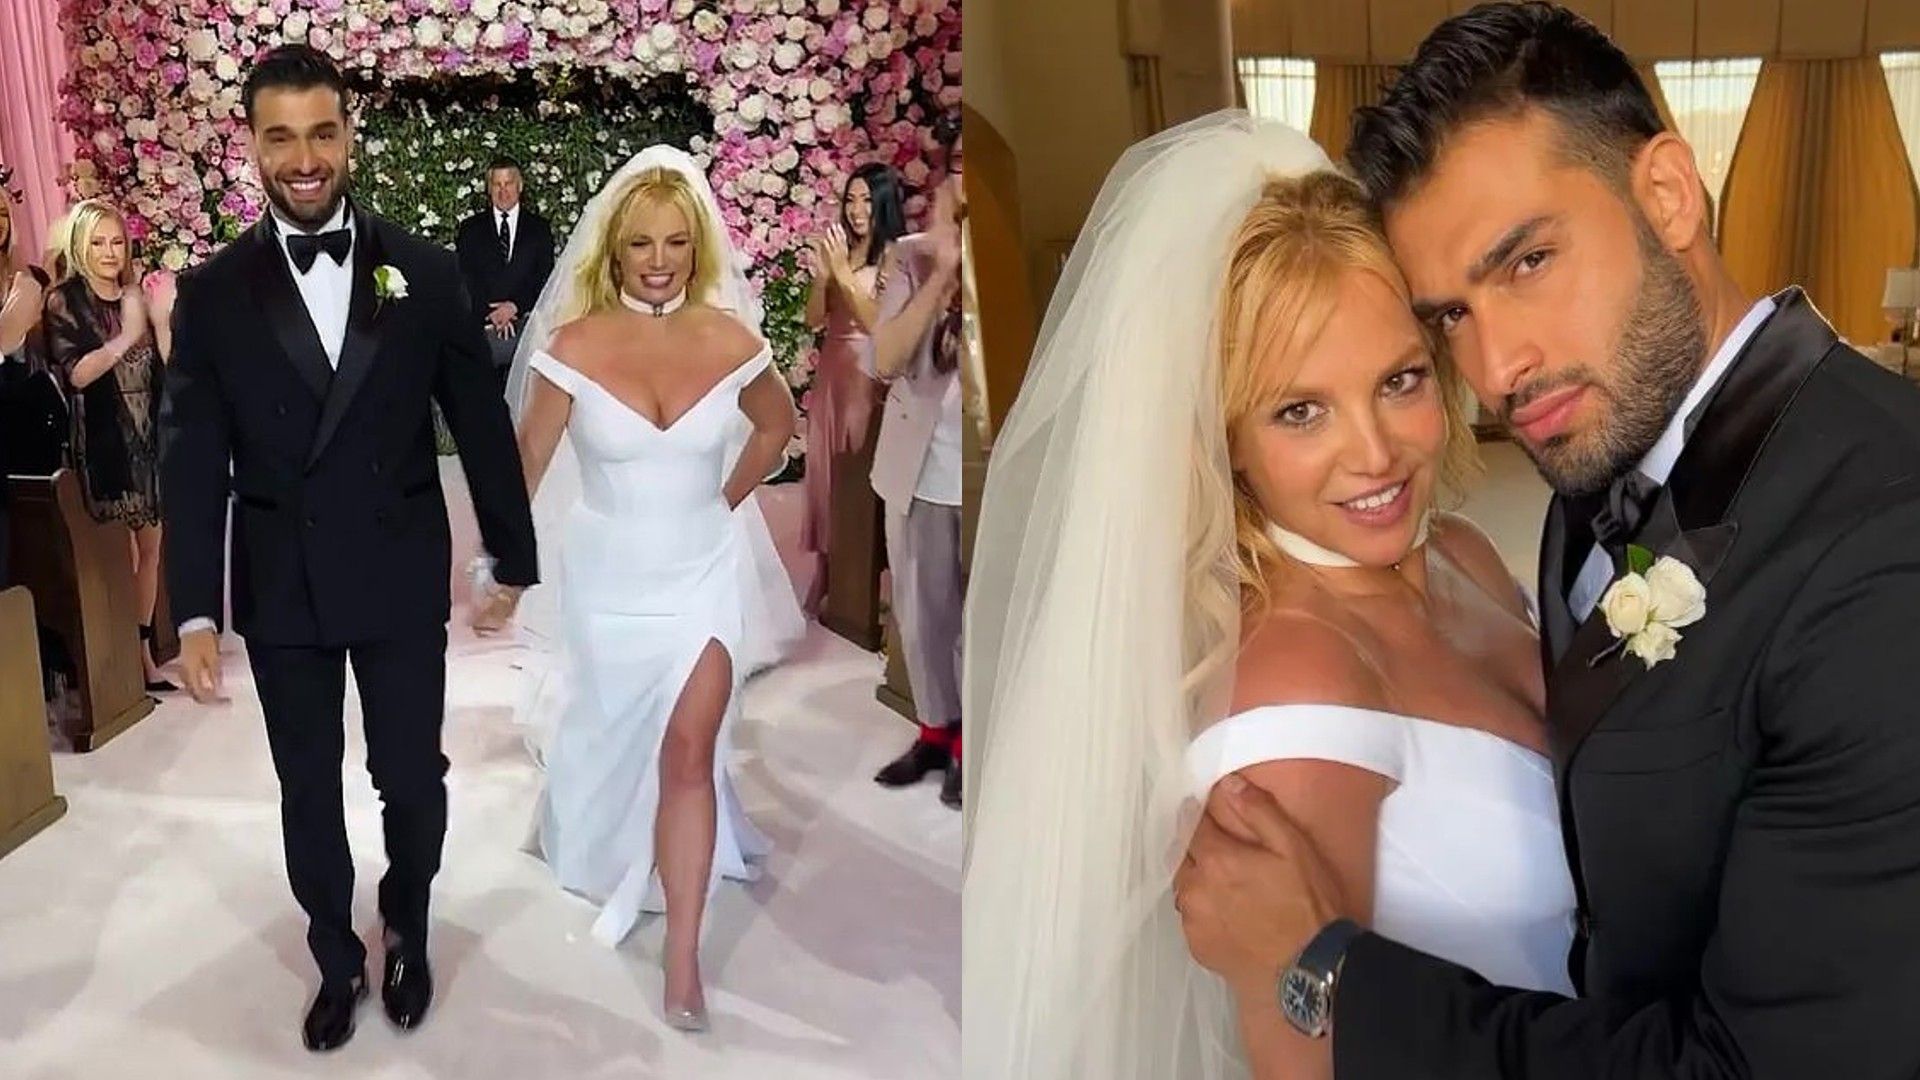 Wedding of Sam Asghari and Britney Spears